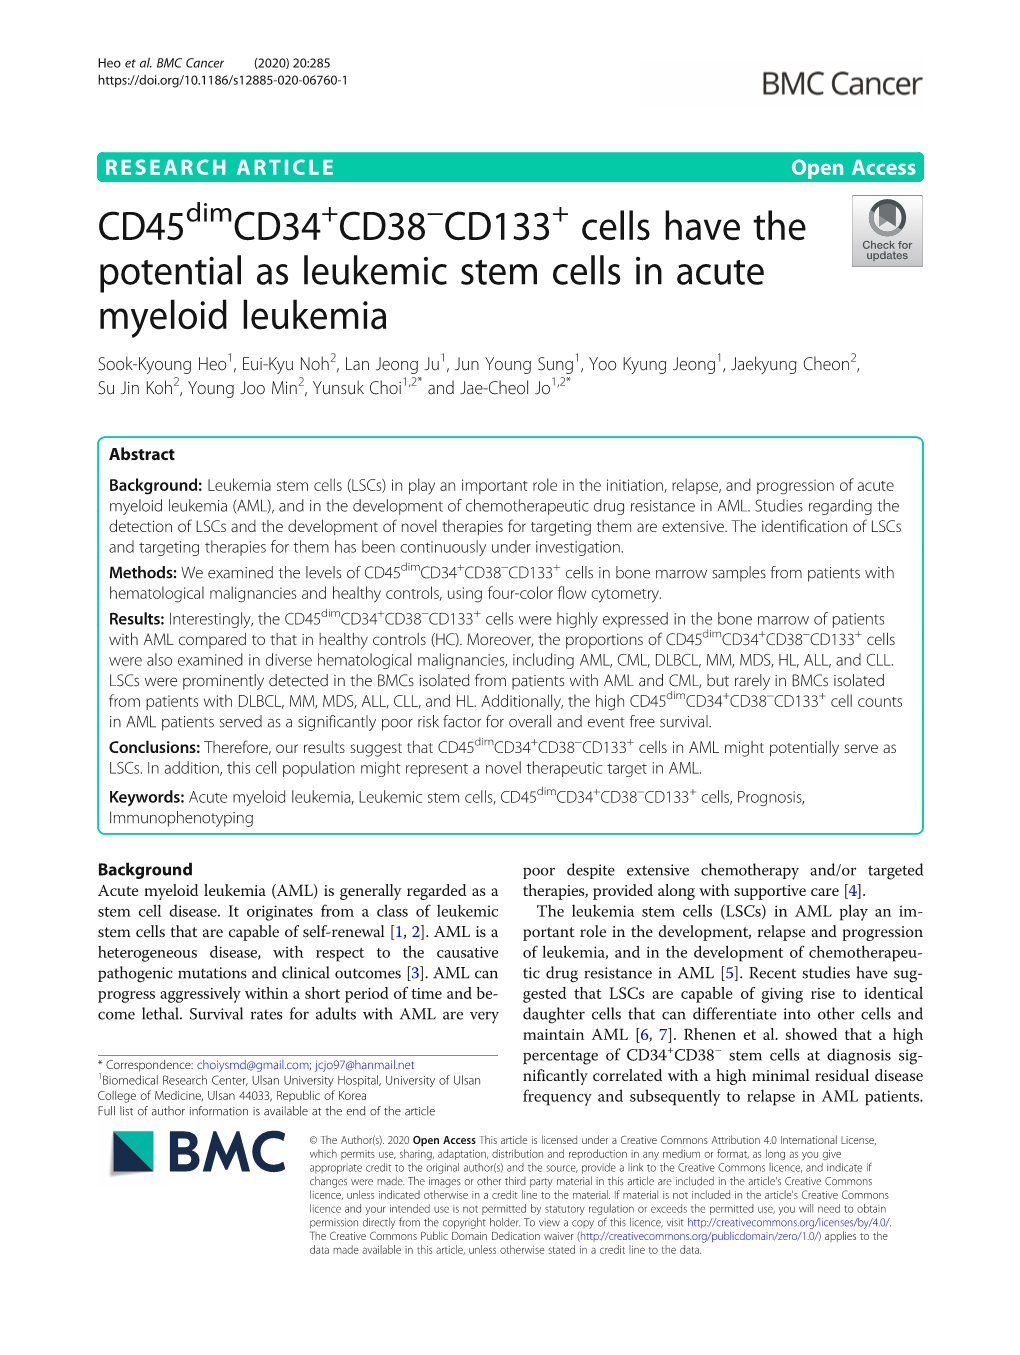 Cd45dimcd34+CD38-CD133+ Cells Have the Potential As Leukemic Stem